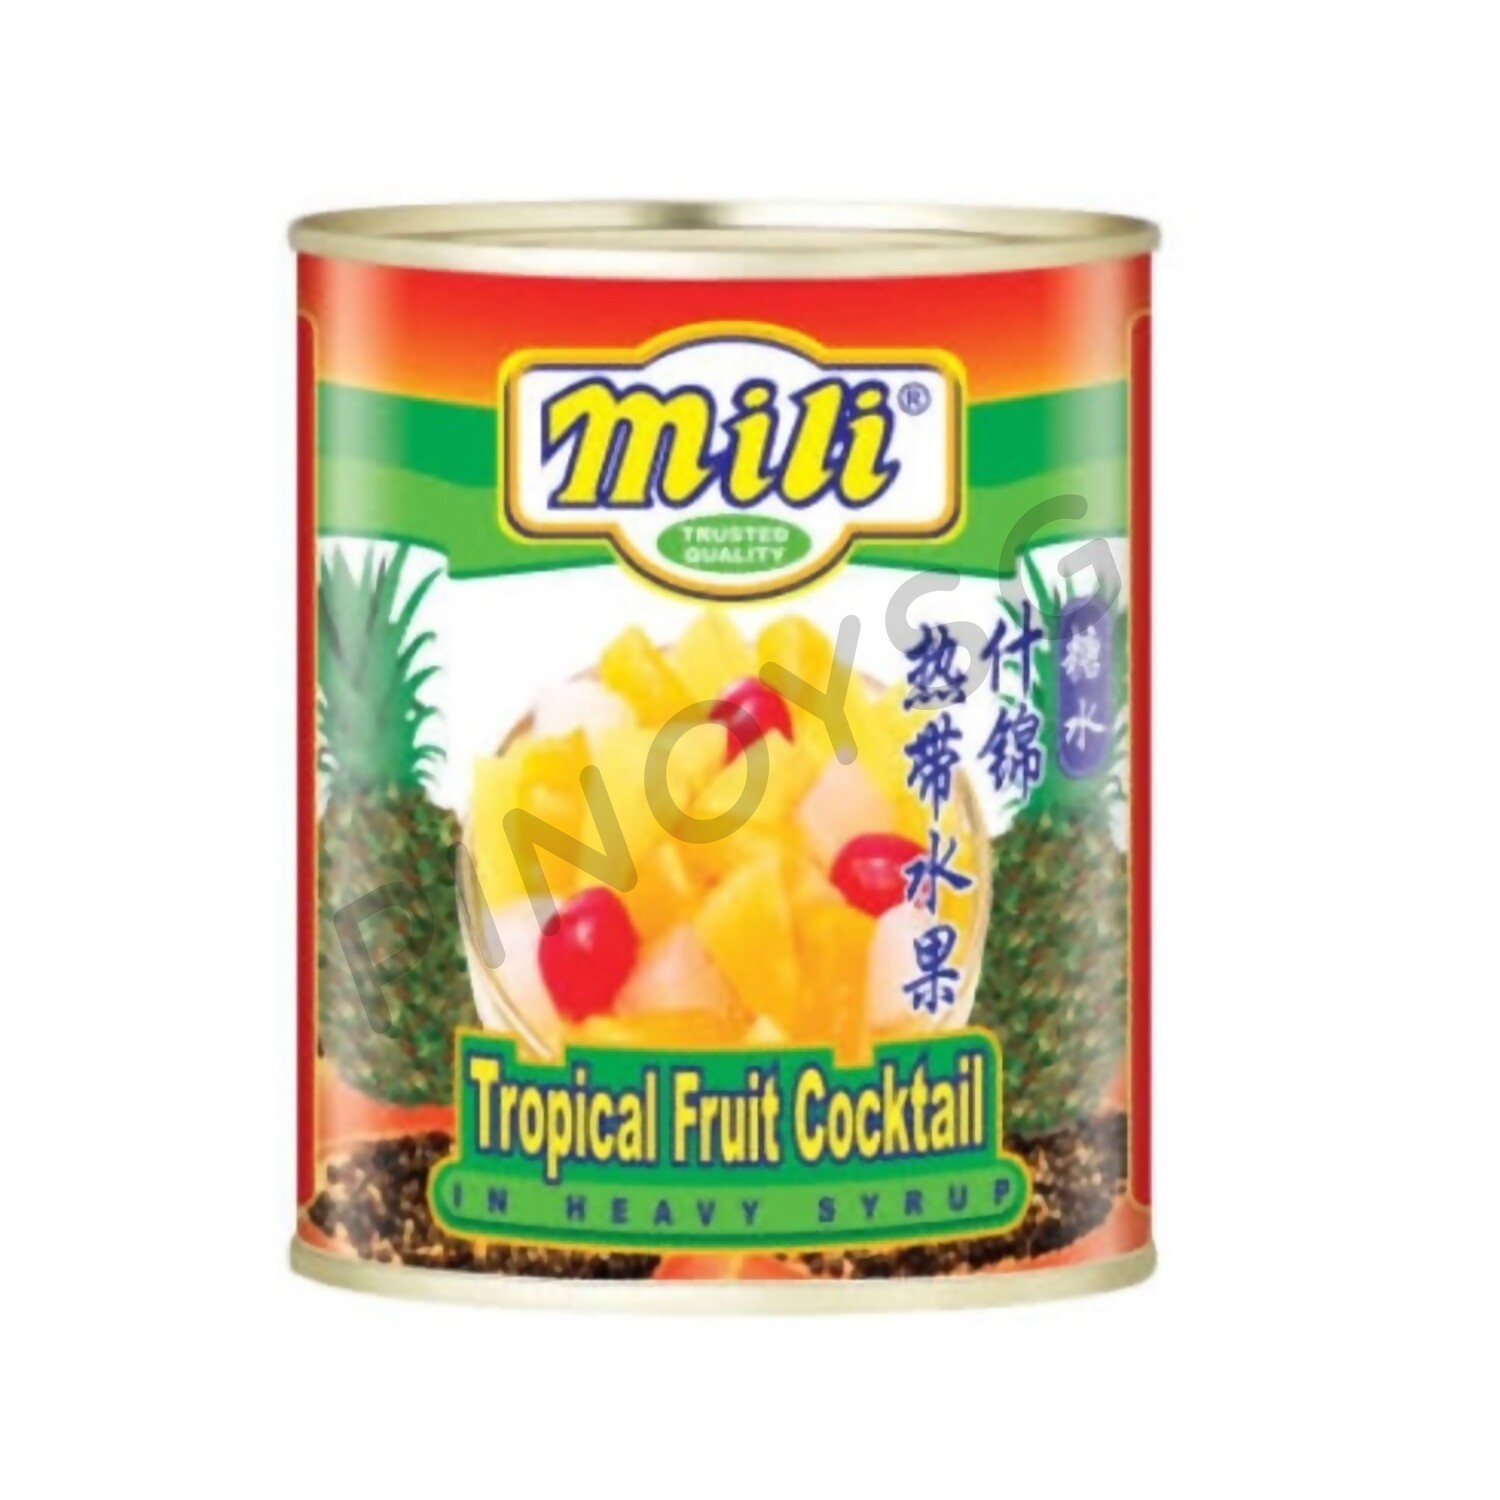 Mili Tropical Fruit Cocktail, 825g